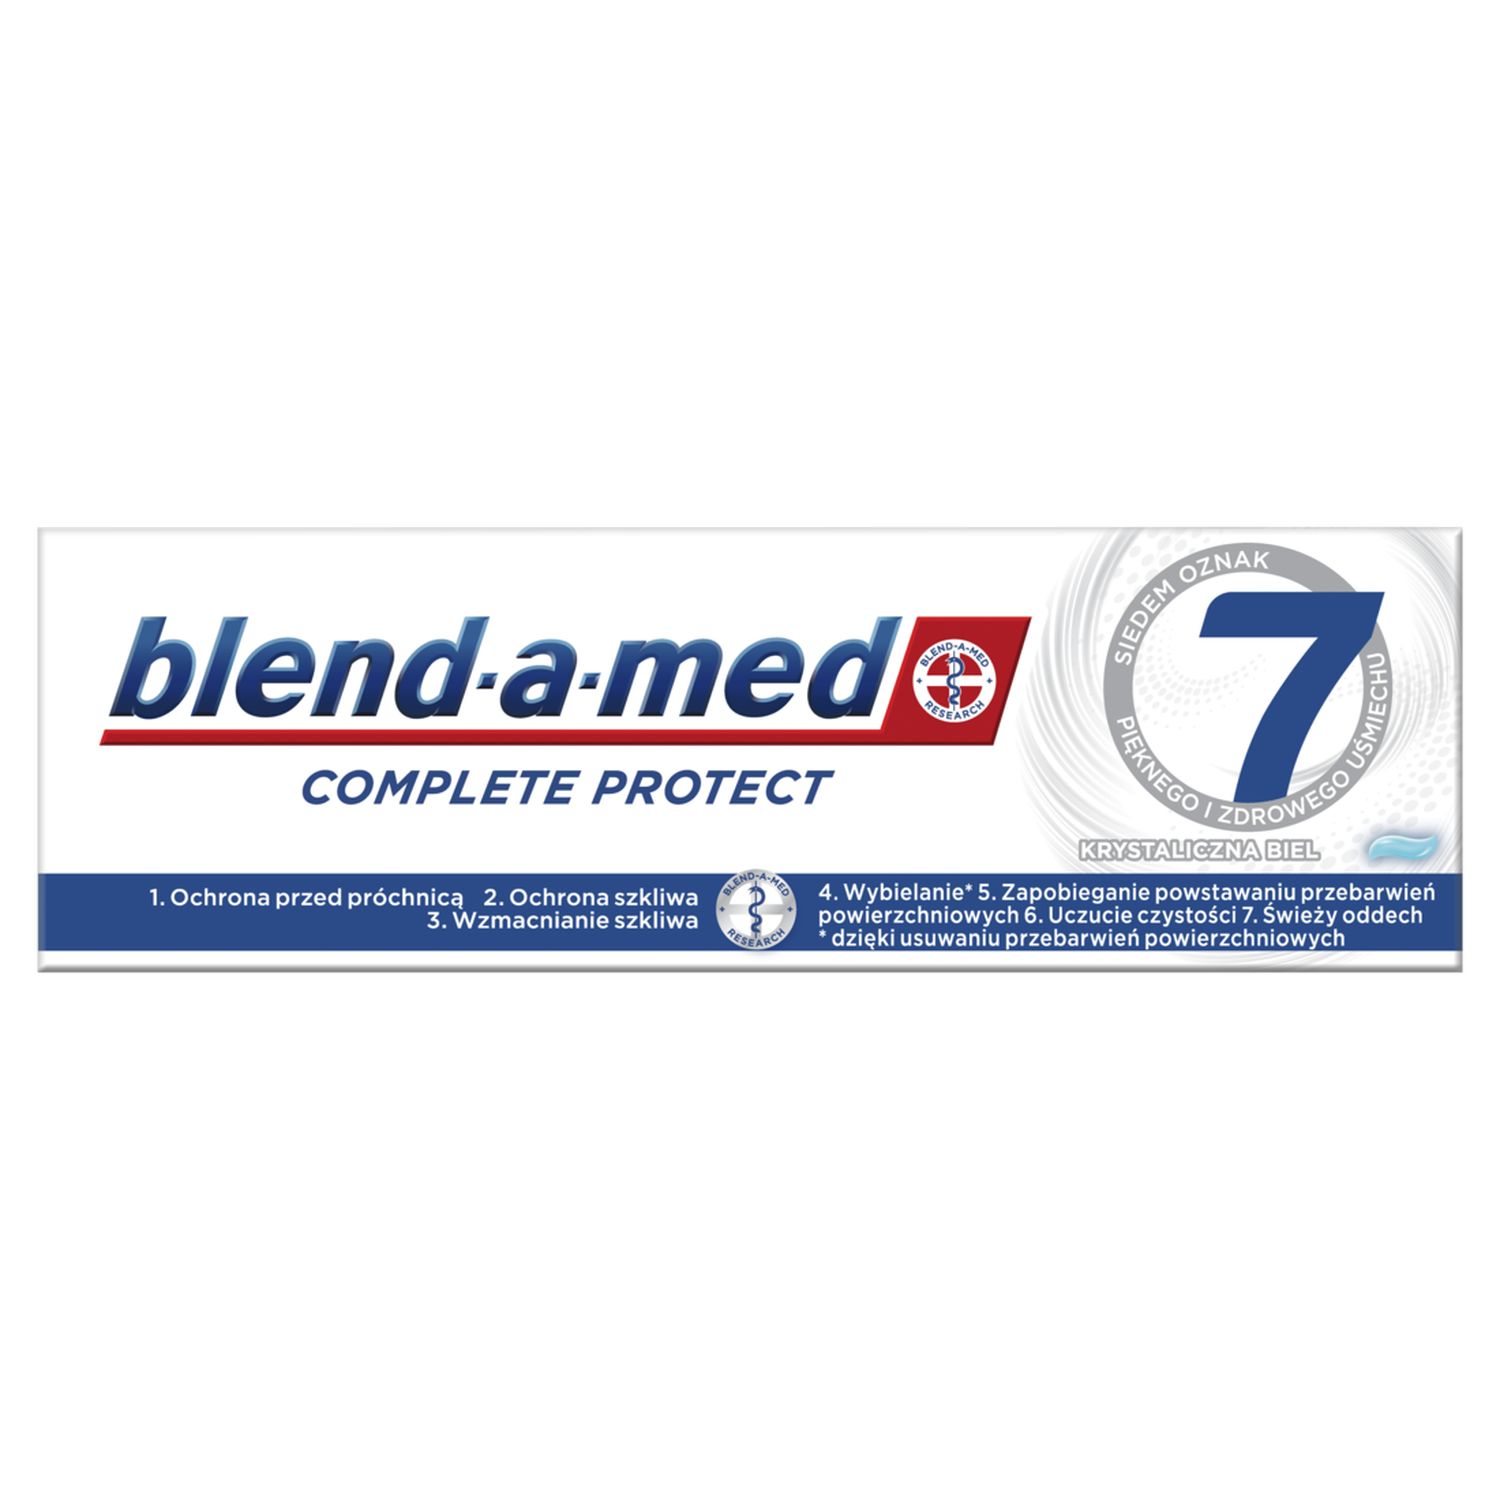 Зубная паста Blend-a-med Complete Protect 7 Кристальная белизна 75 мл - фото 3